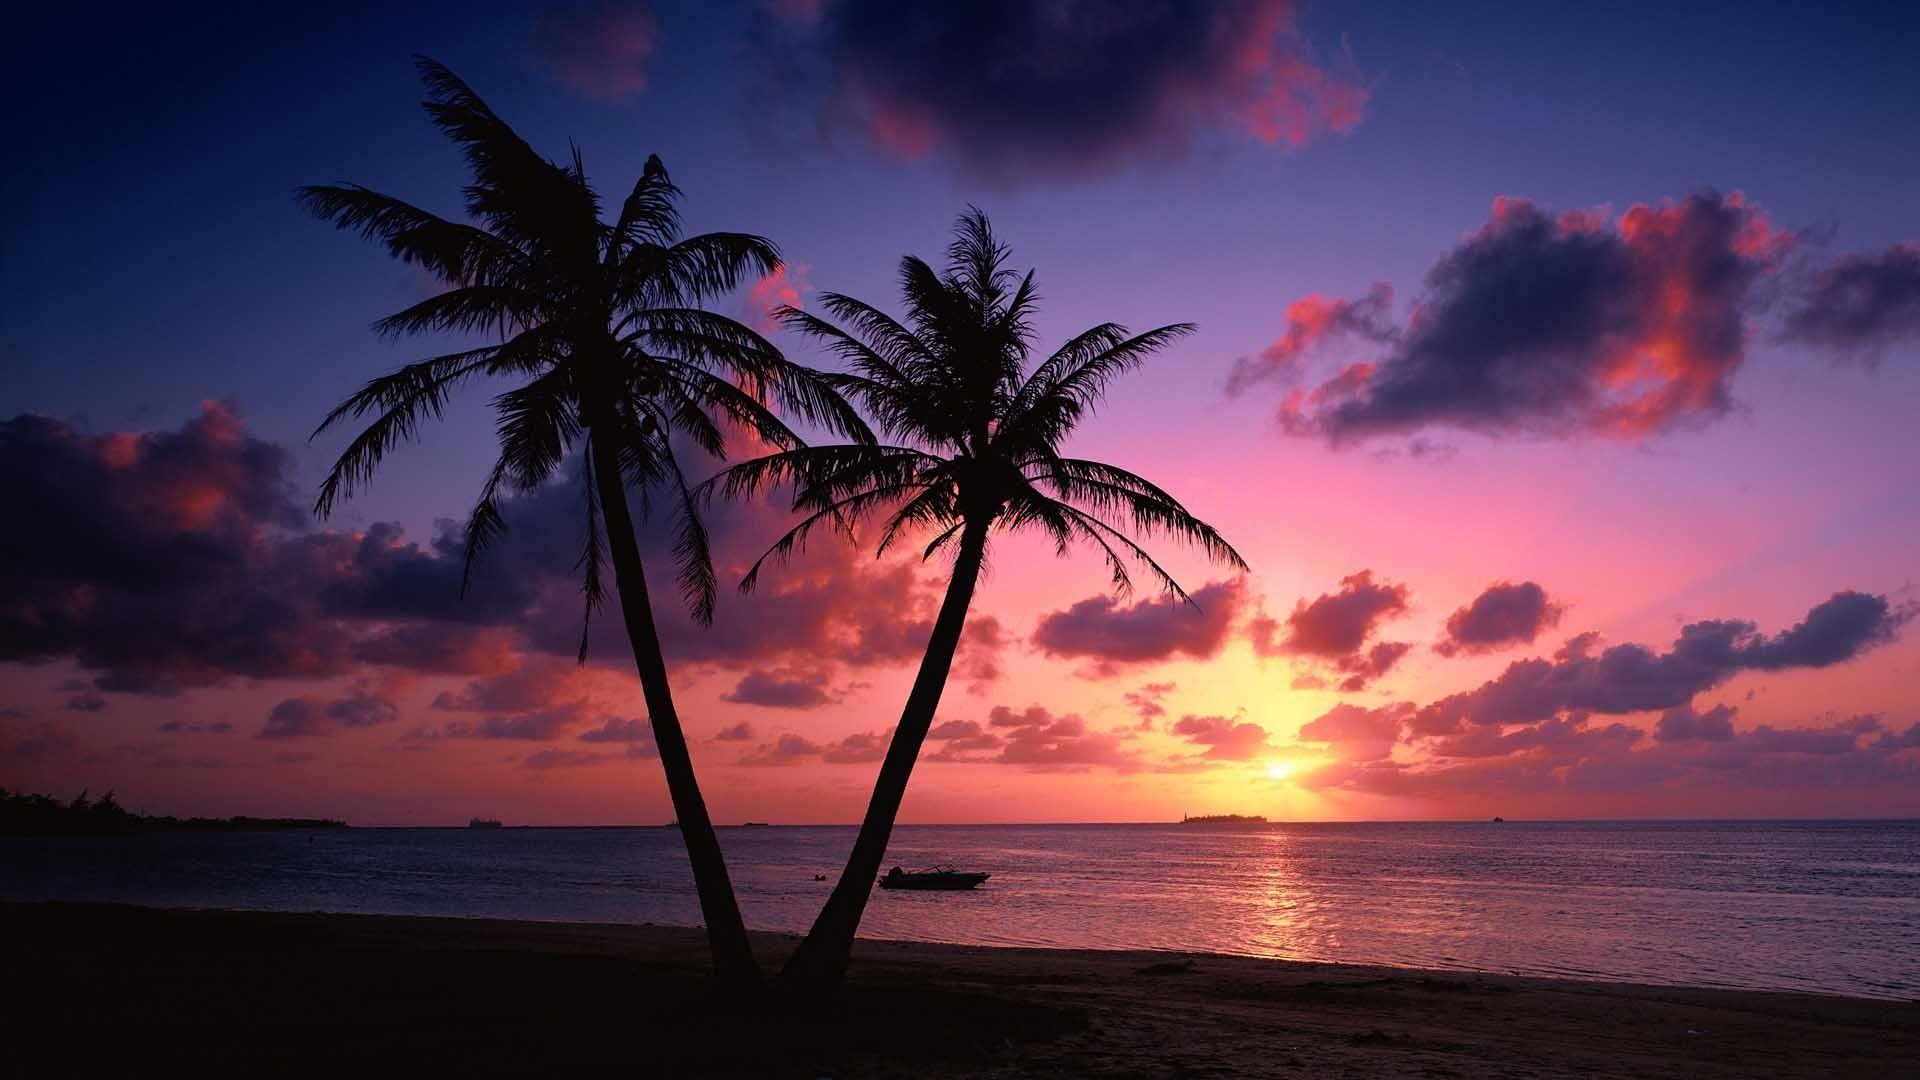 63145 Pink Beach Sunrise Images Stock Photos  Vectors  Shutterstock